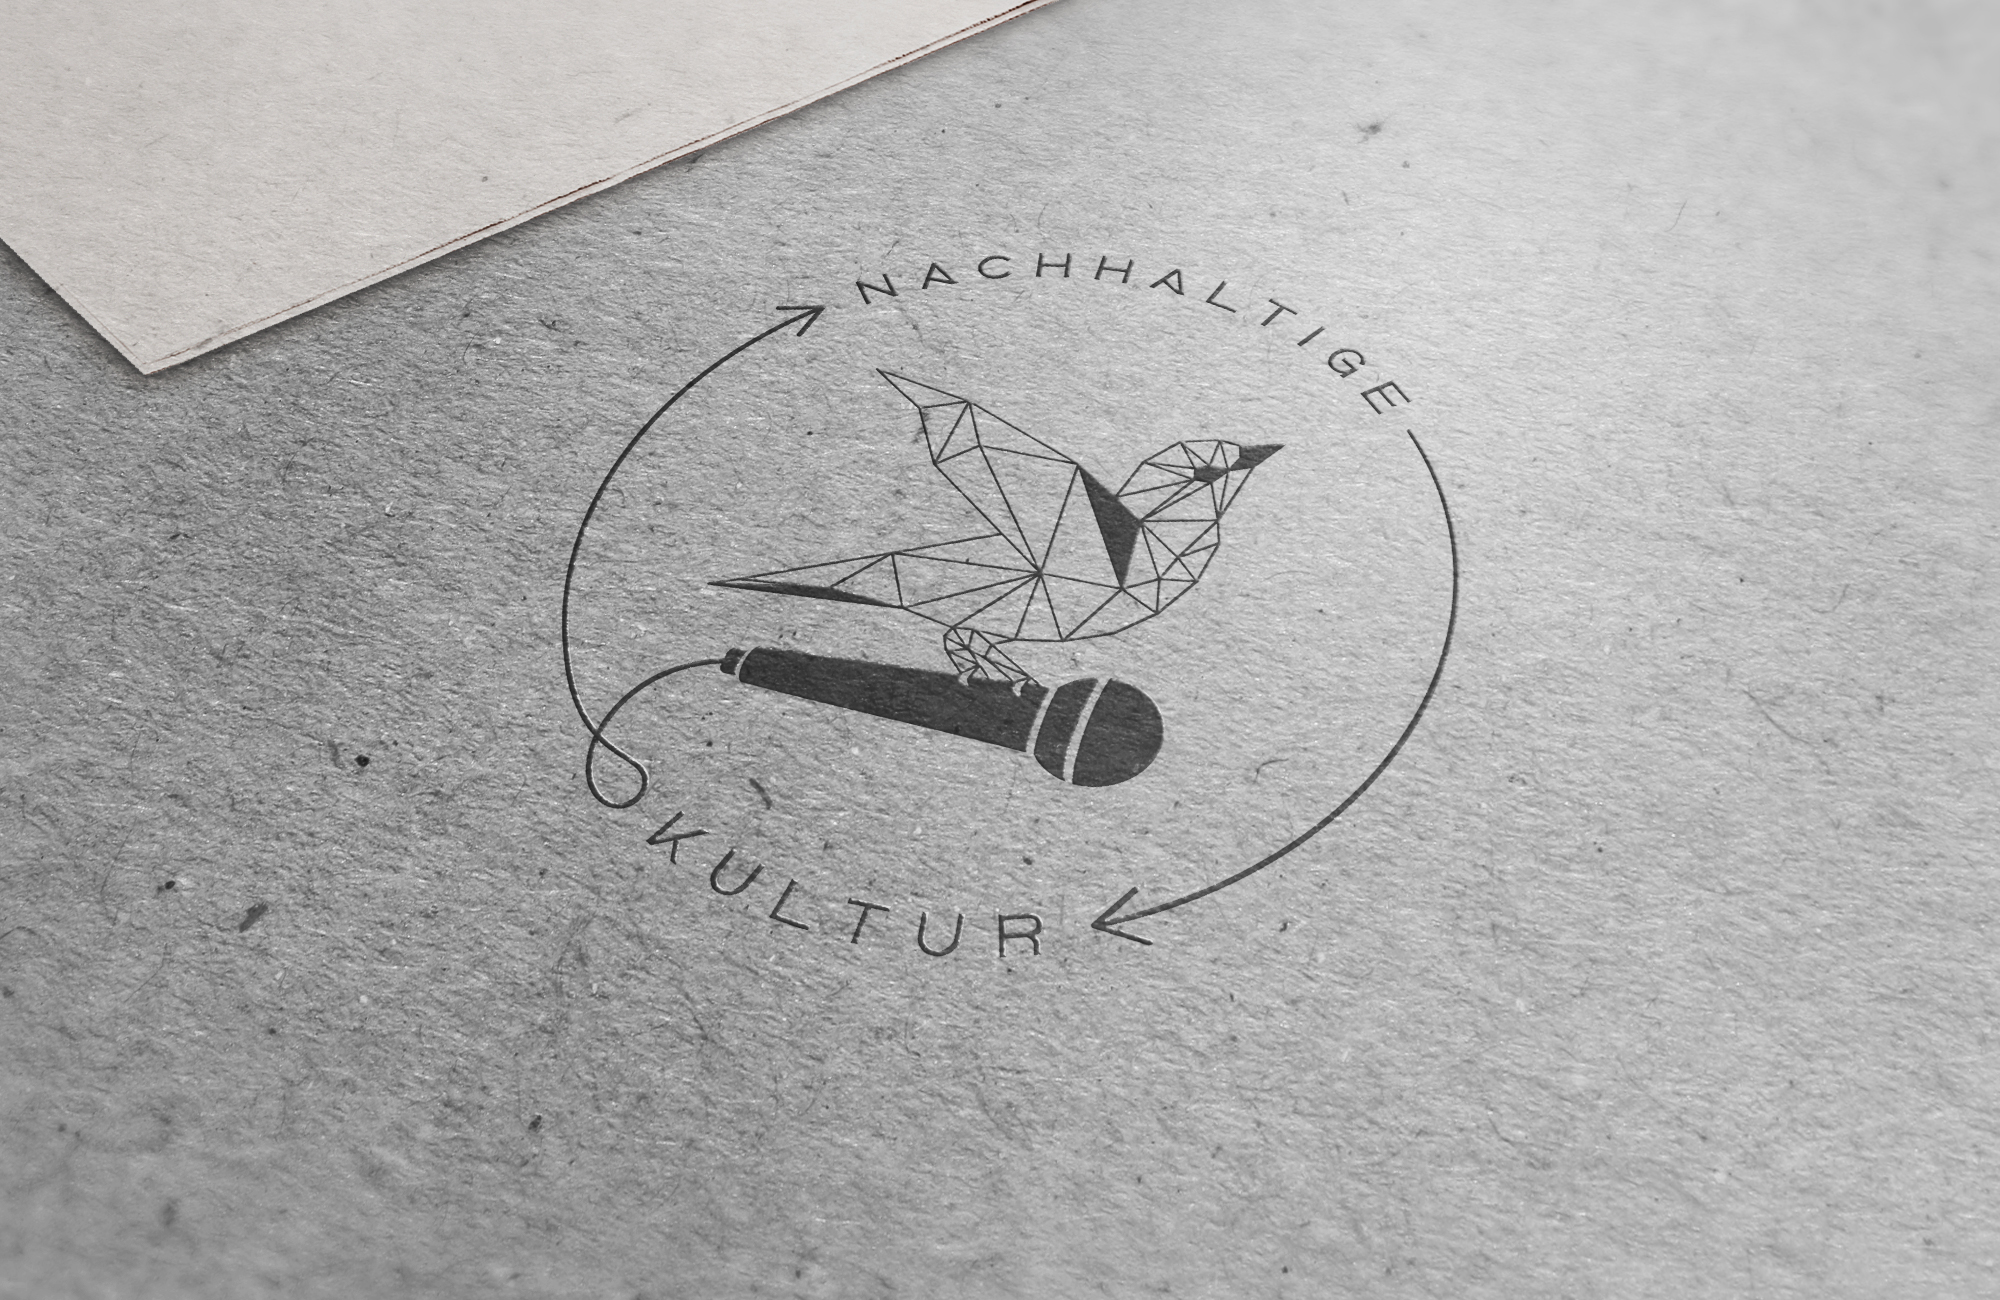 Logo design for consulting agency Nachhaltige Kultur by Yvonne Hartmann